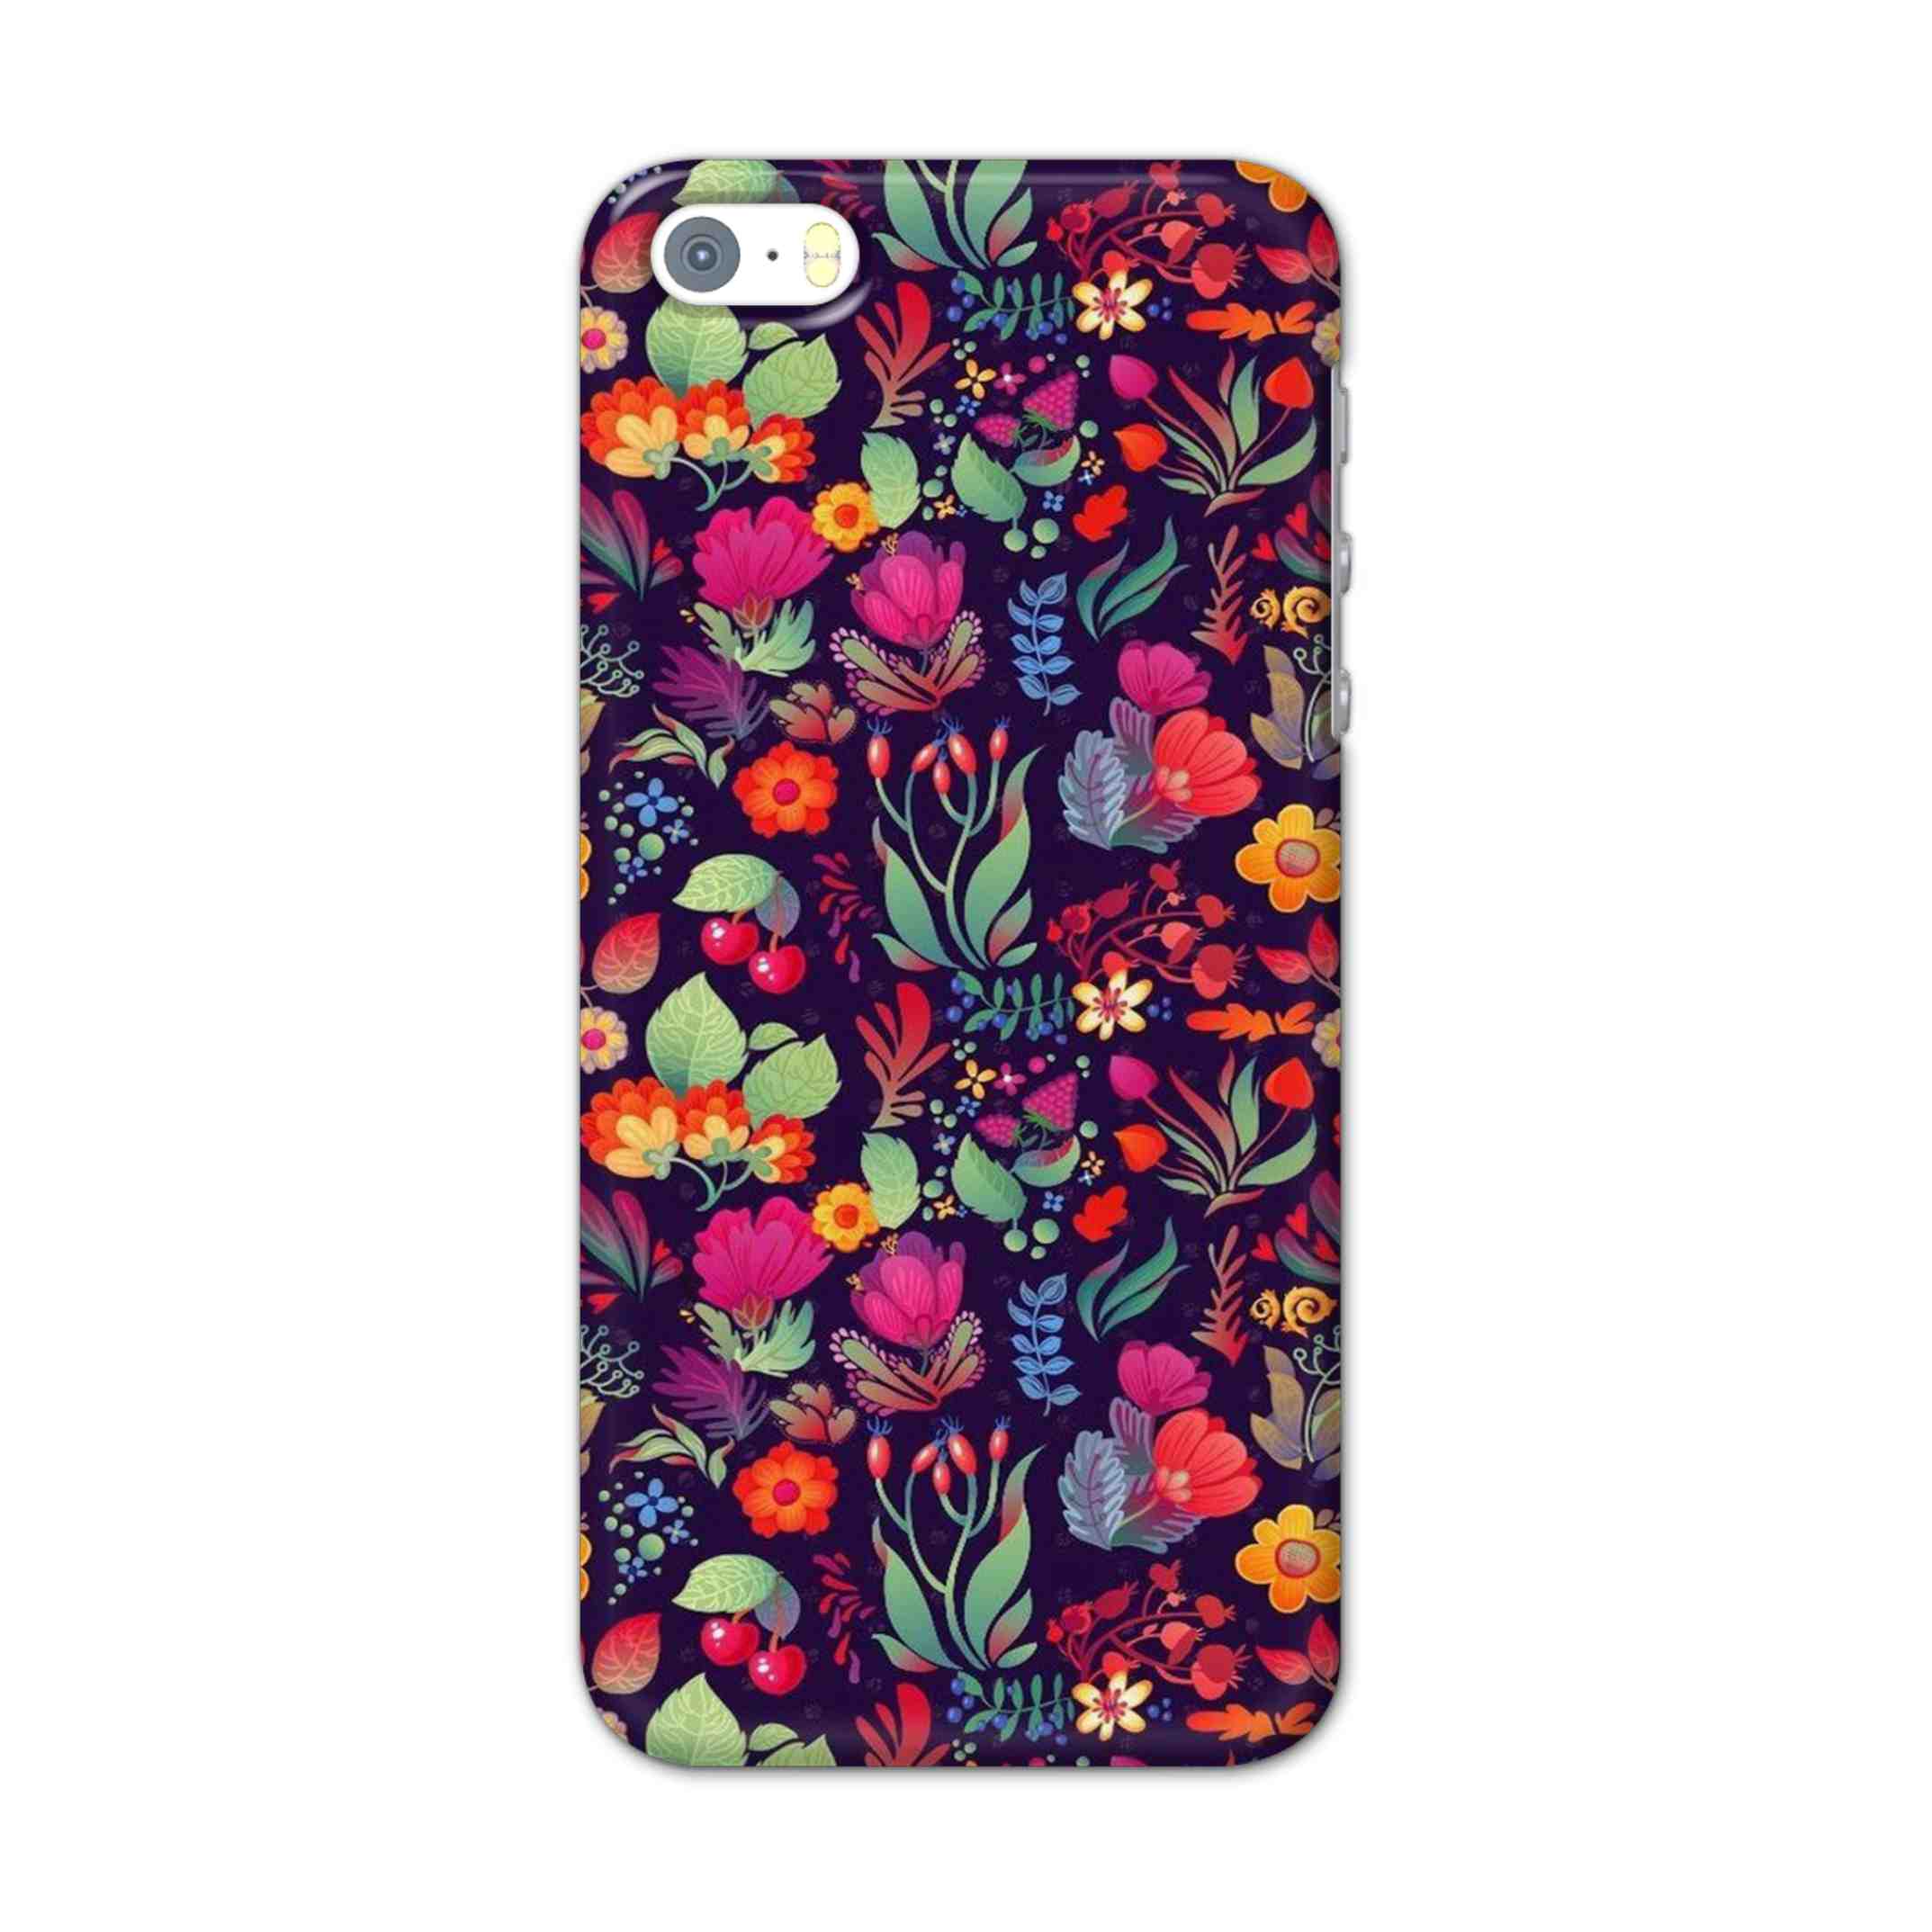 Buy Fruits Flower Hard Back Mobile Phone Case/Cover For Apple Iphone SE Online